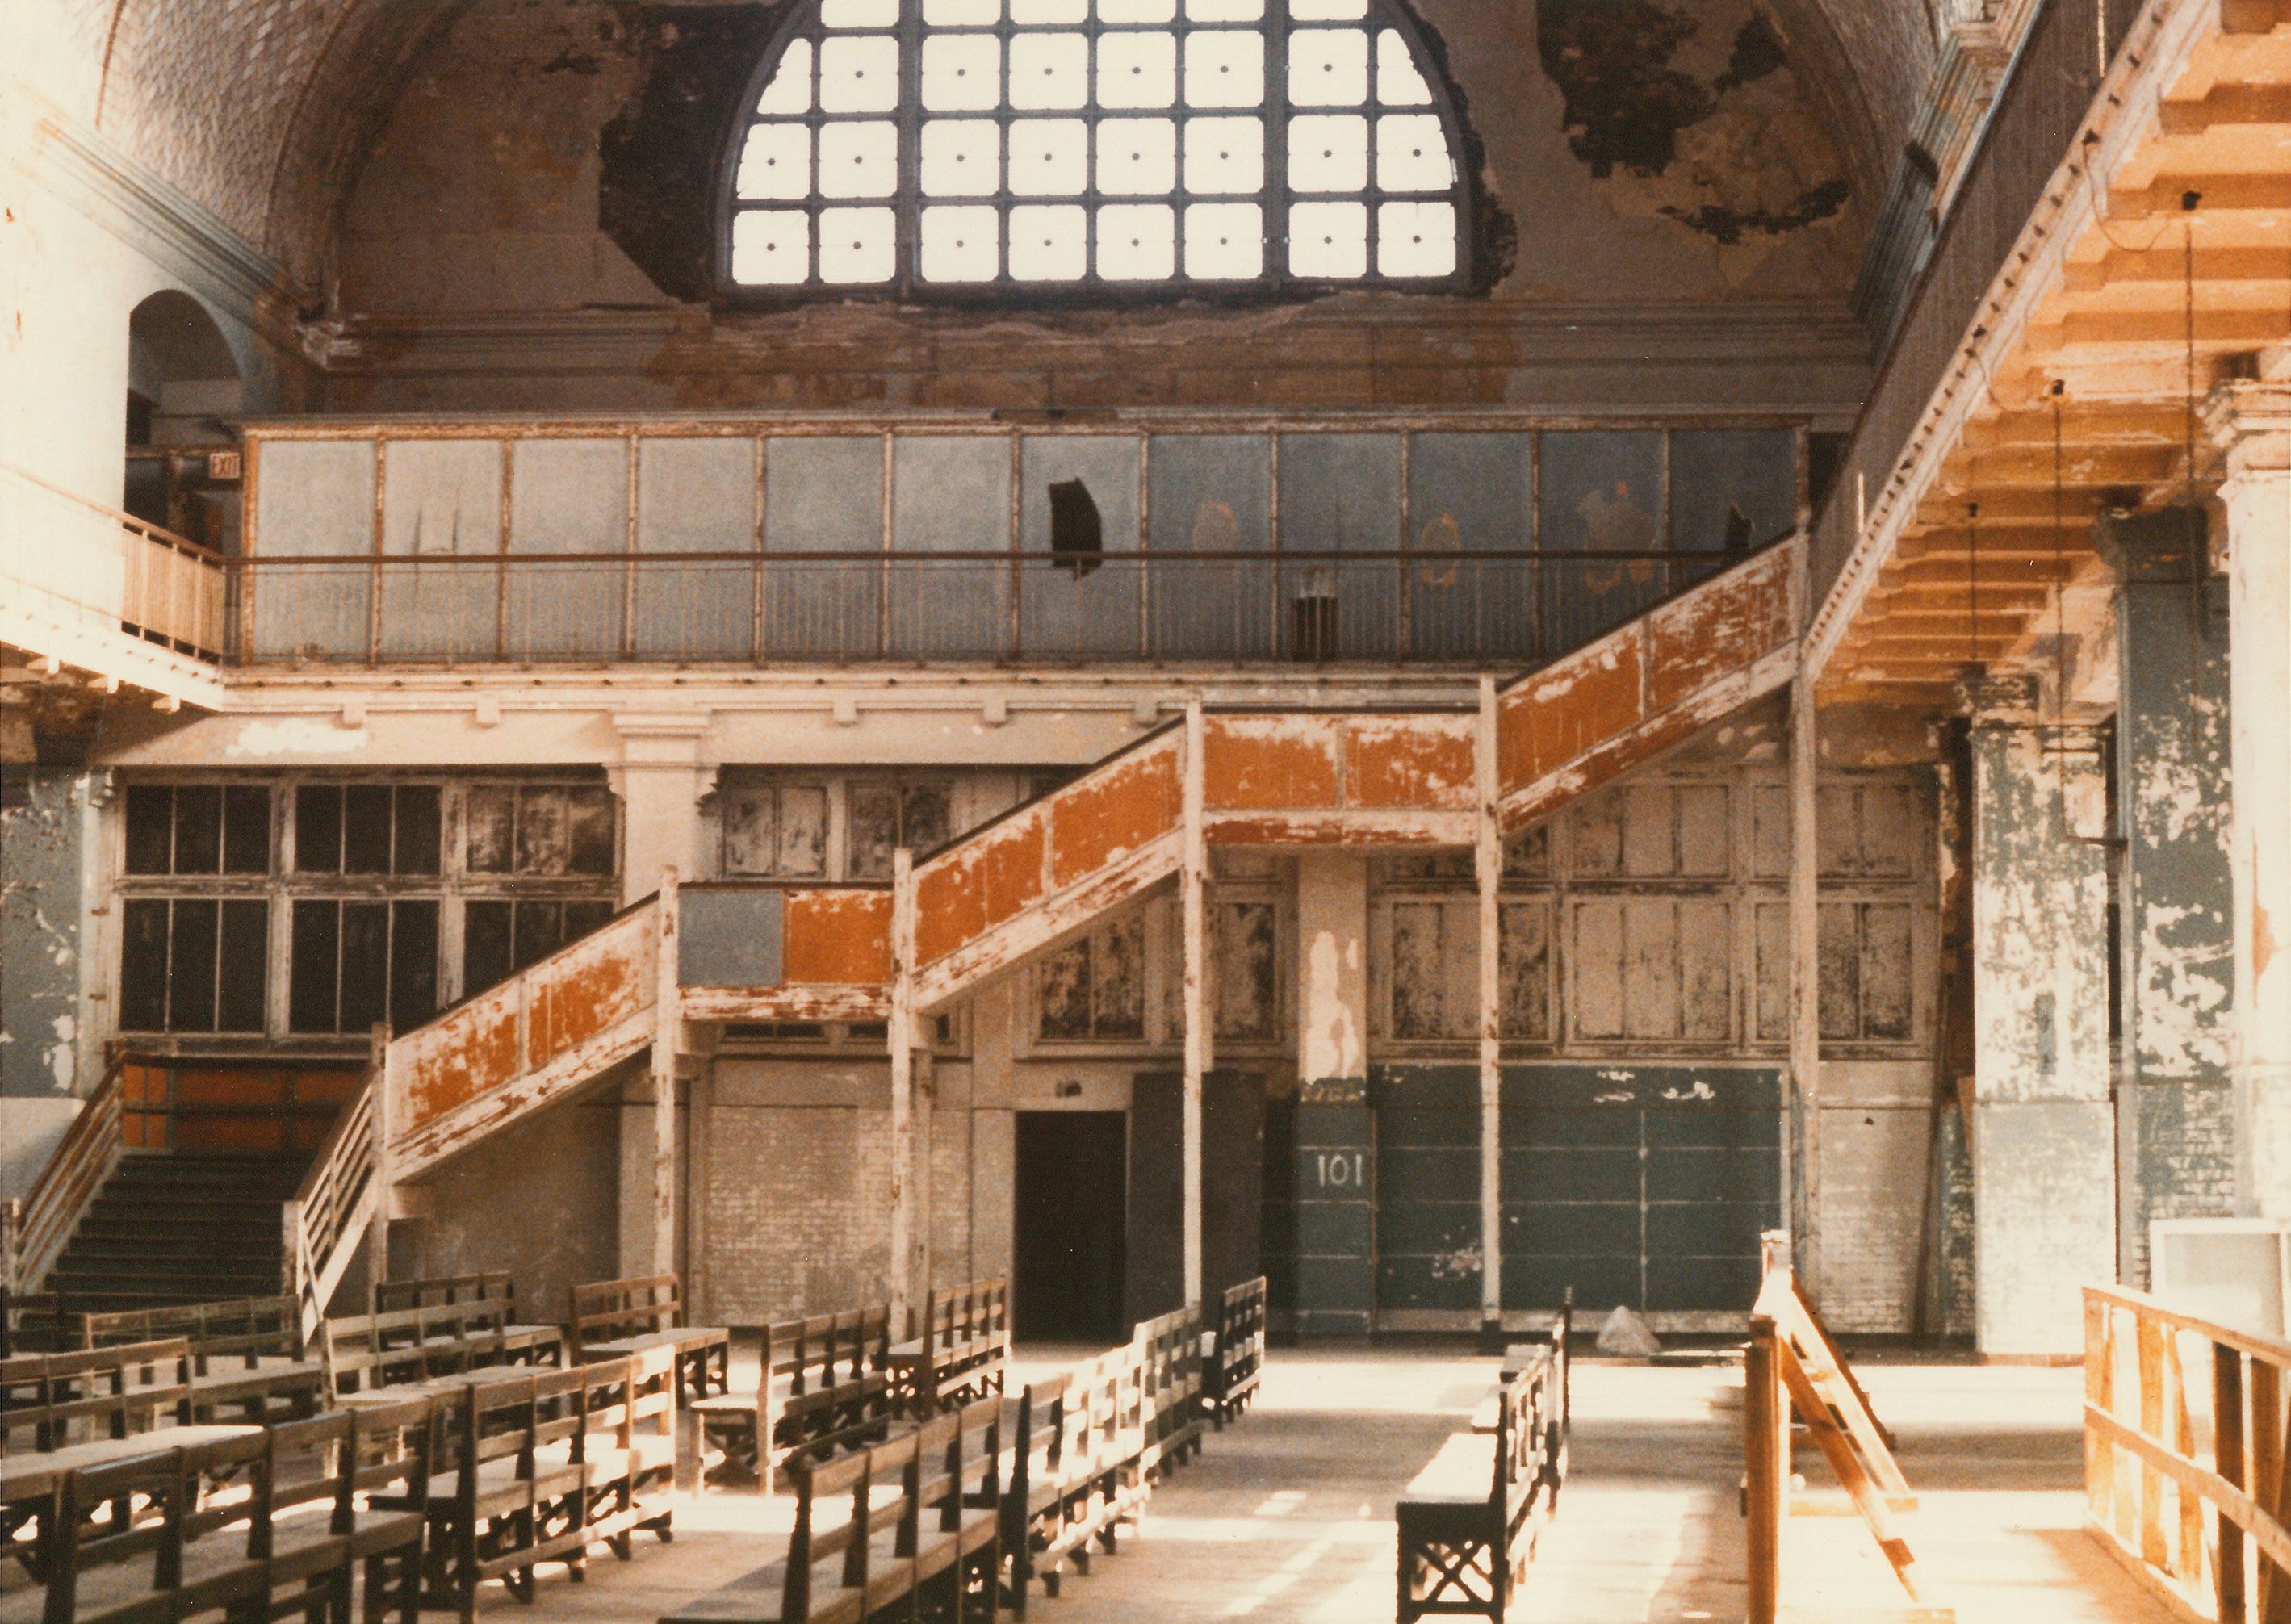 Ellis Island Museum: An American landmark is getting a $100 million ...